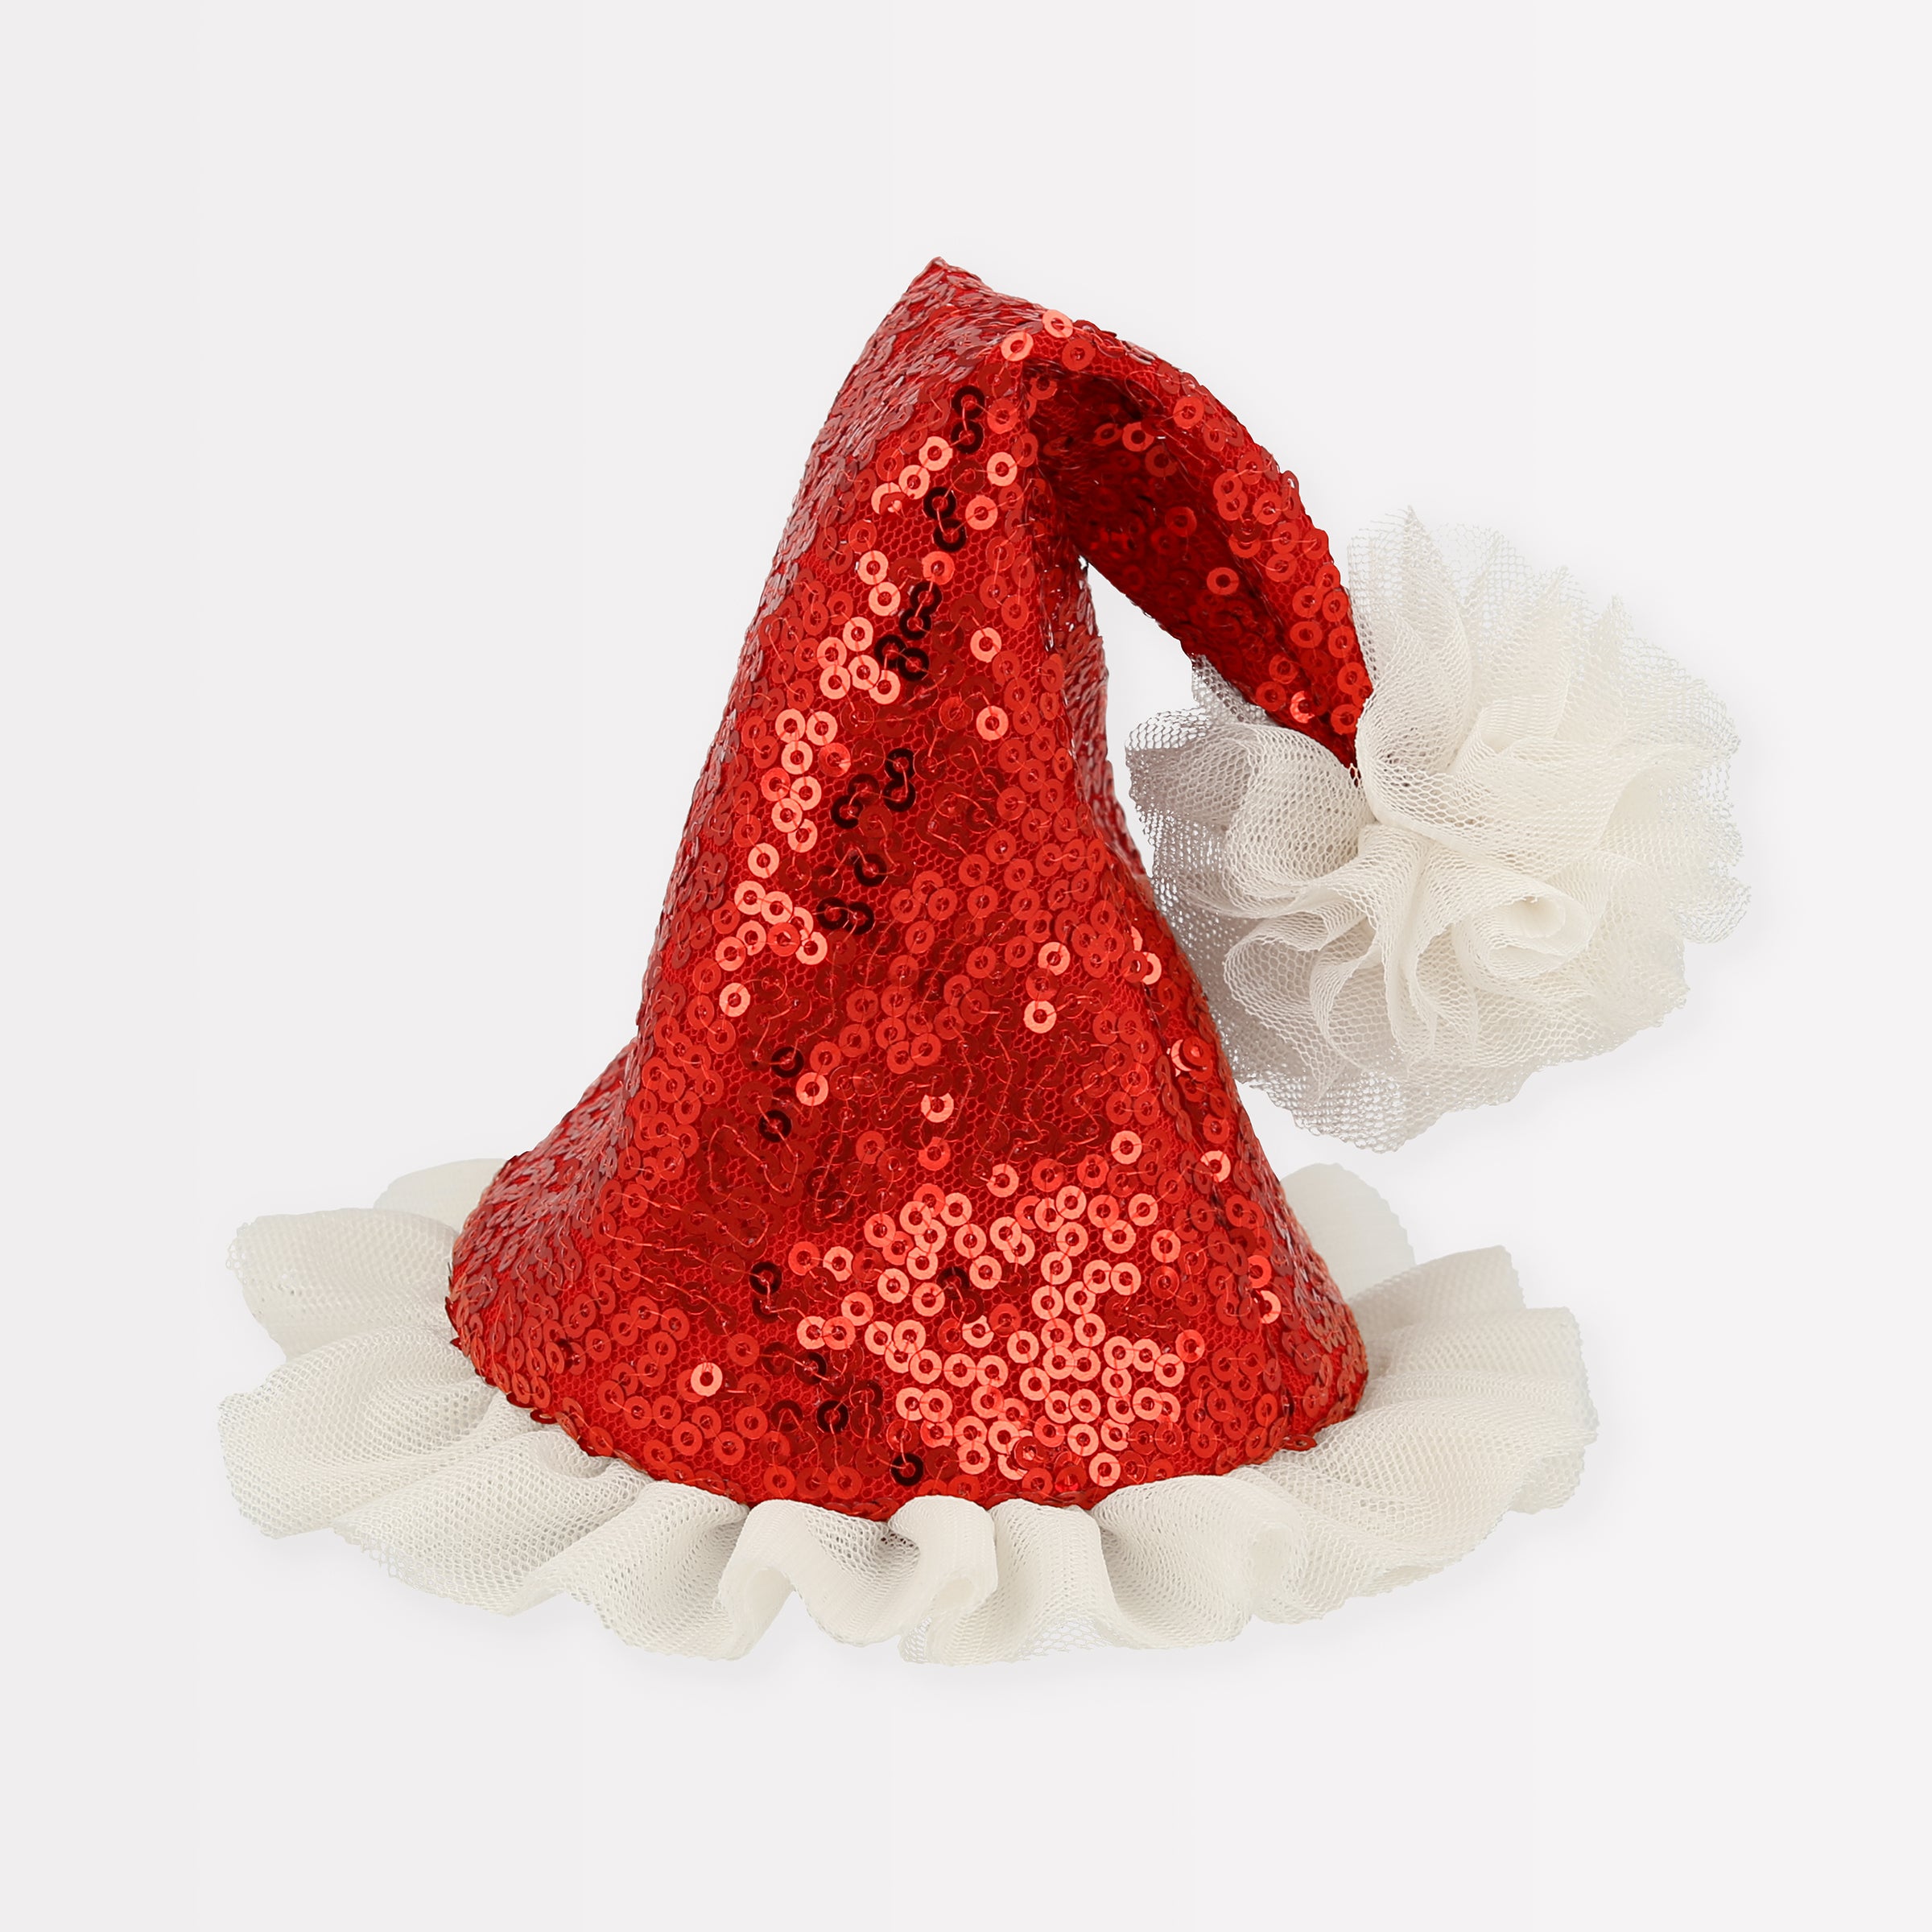 Our Santa hat, designed as Christmas hair clip, is a fabulous kids hair accessory.